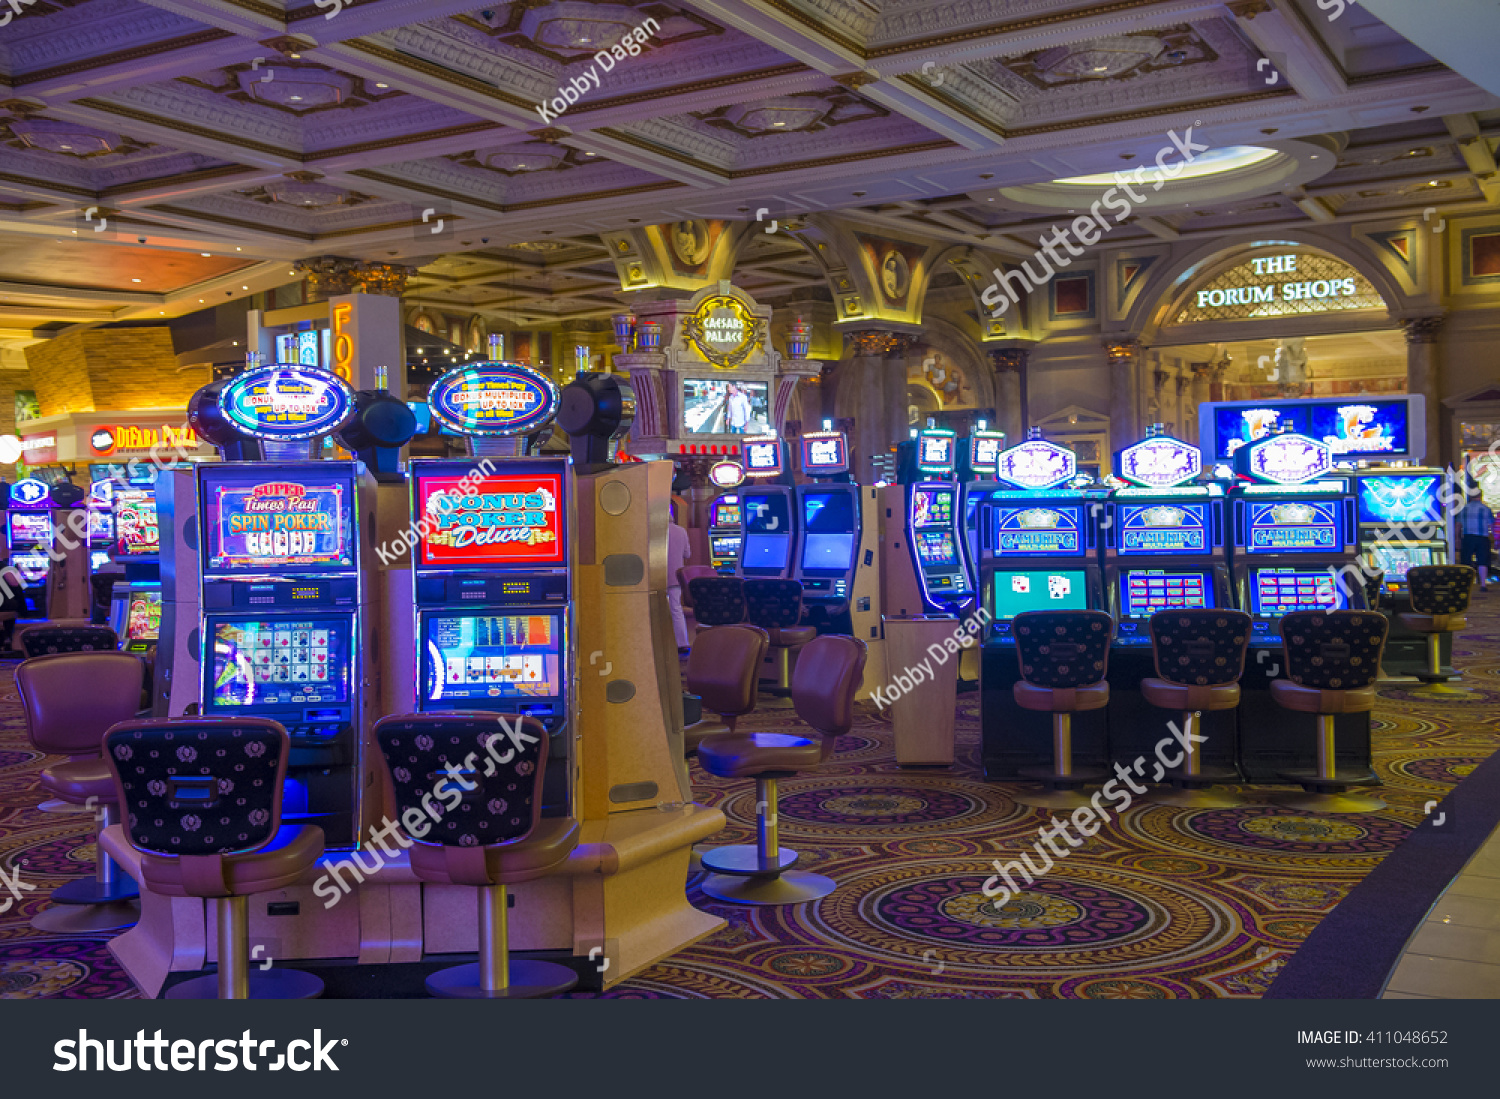 Caesars palace slot machine list